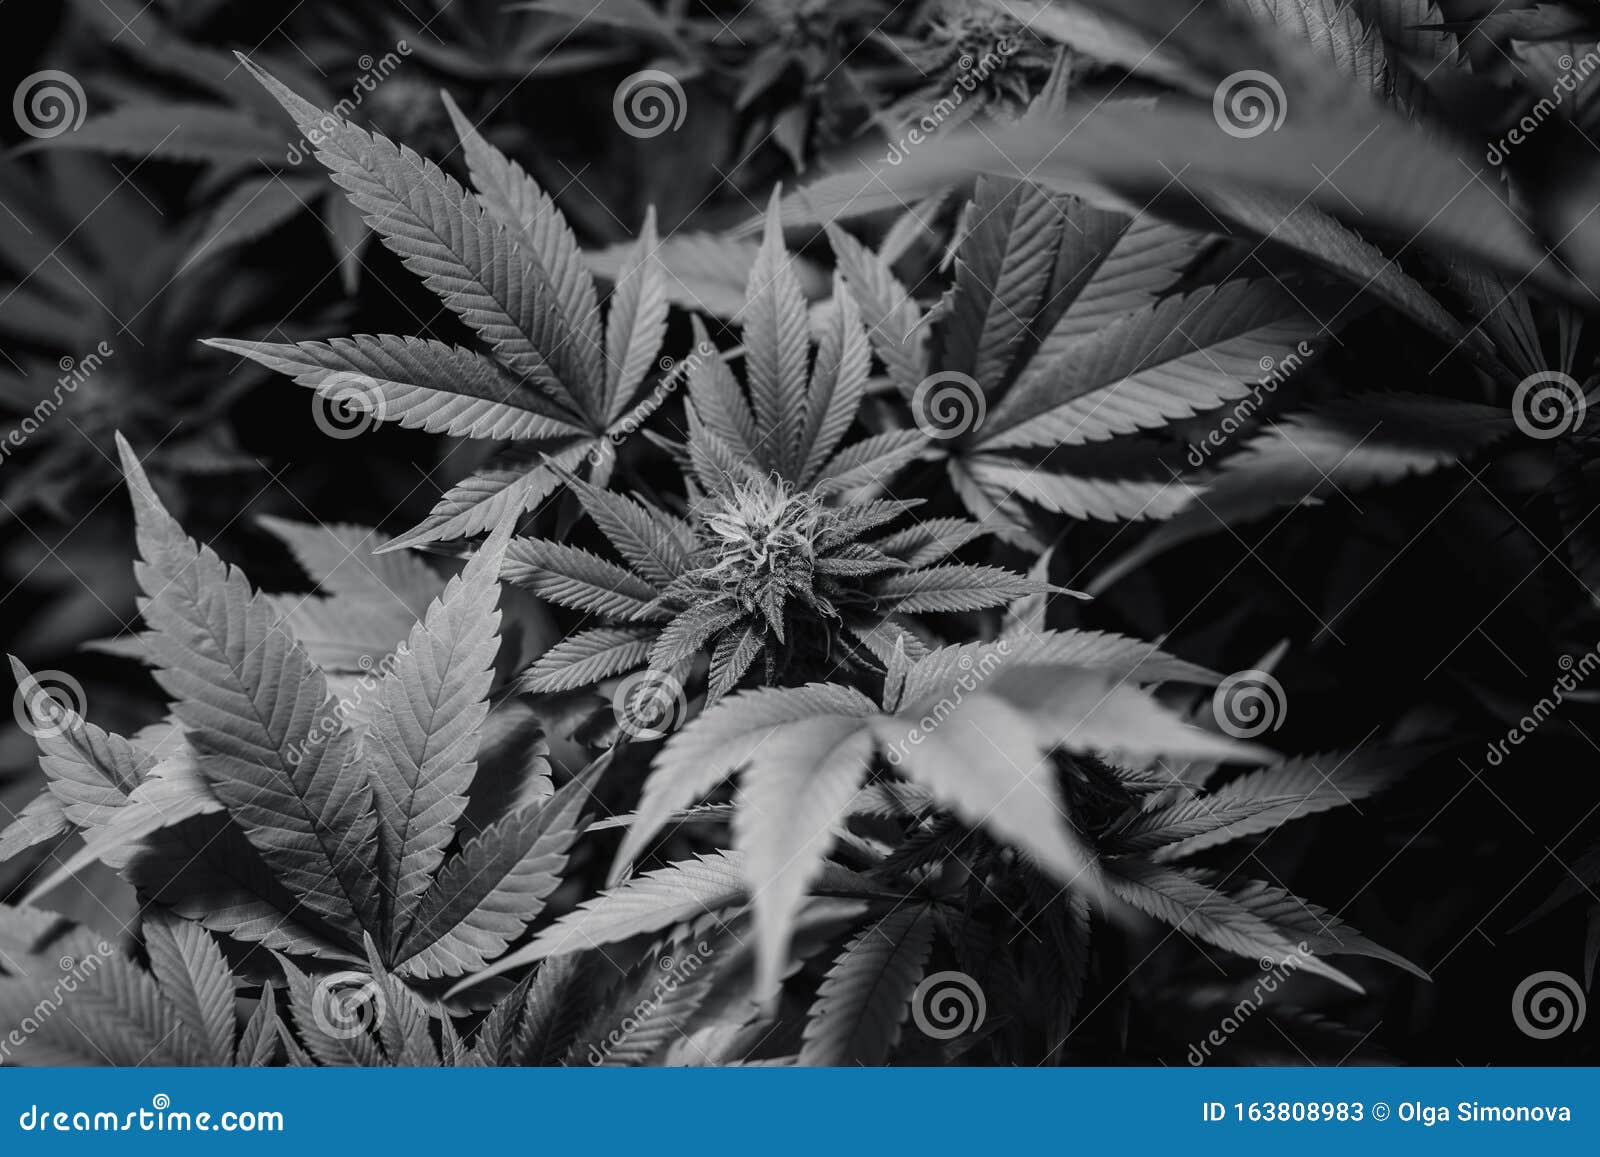 Cannabis Dark Web